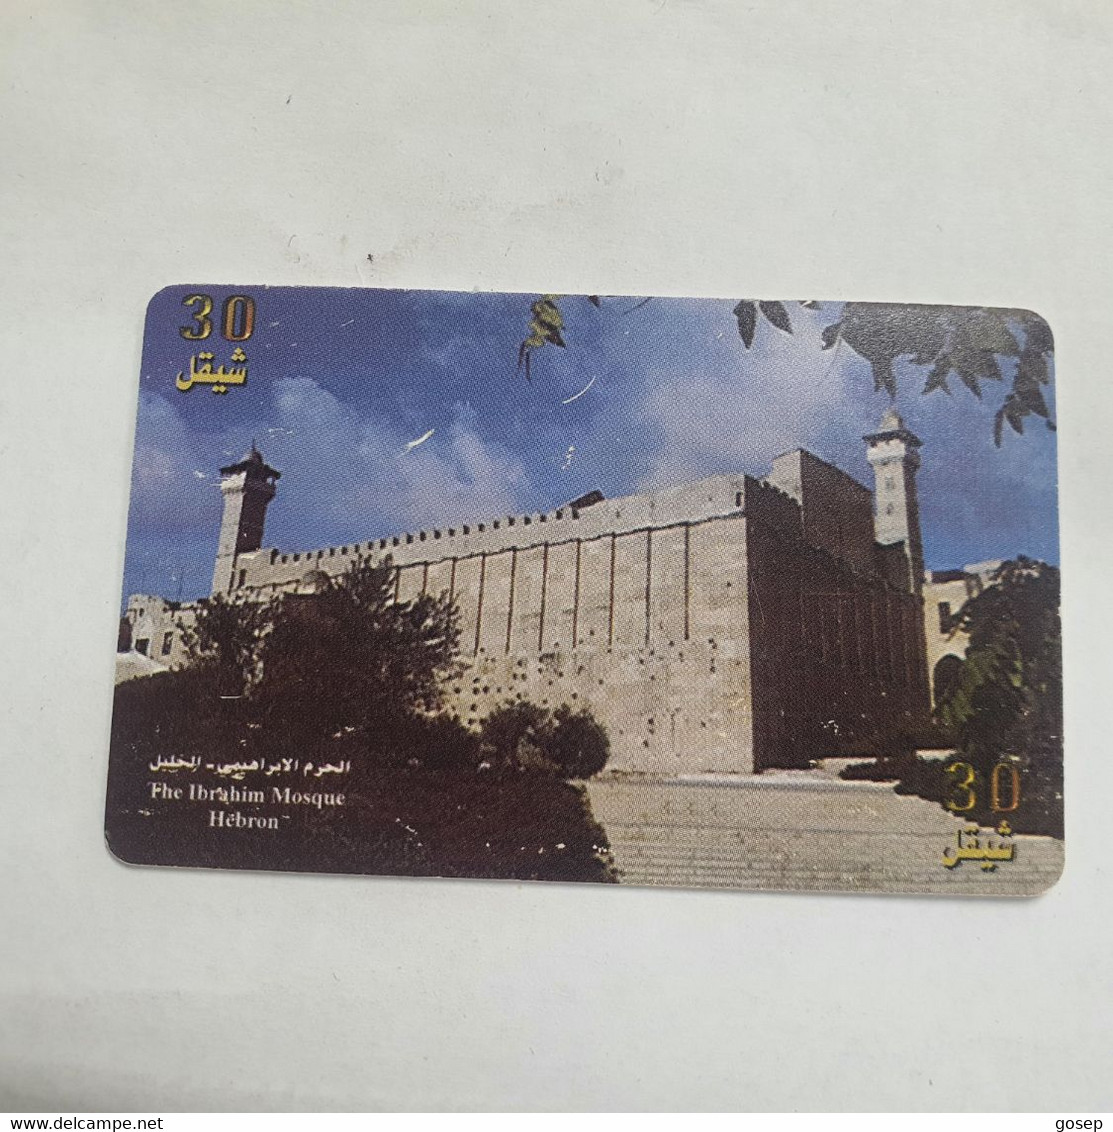 Plastine-(PS-PAL-0006C)-The Ibrahim-Mosque-hebron-(464)-(9/1999)(30₪)(0035-043916)-used Card+1card Prepiad Free - Palestine